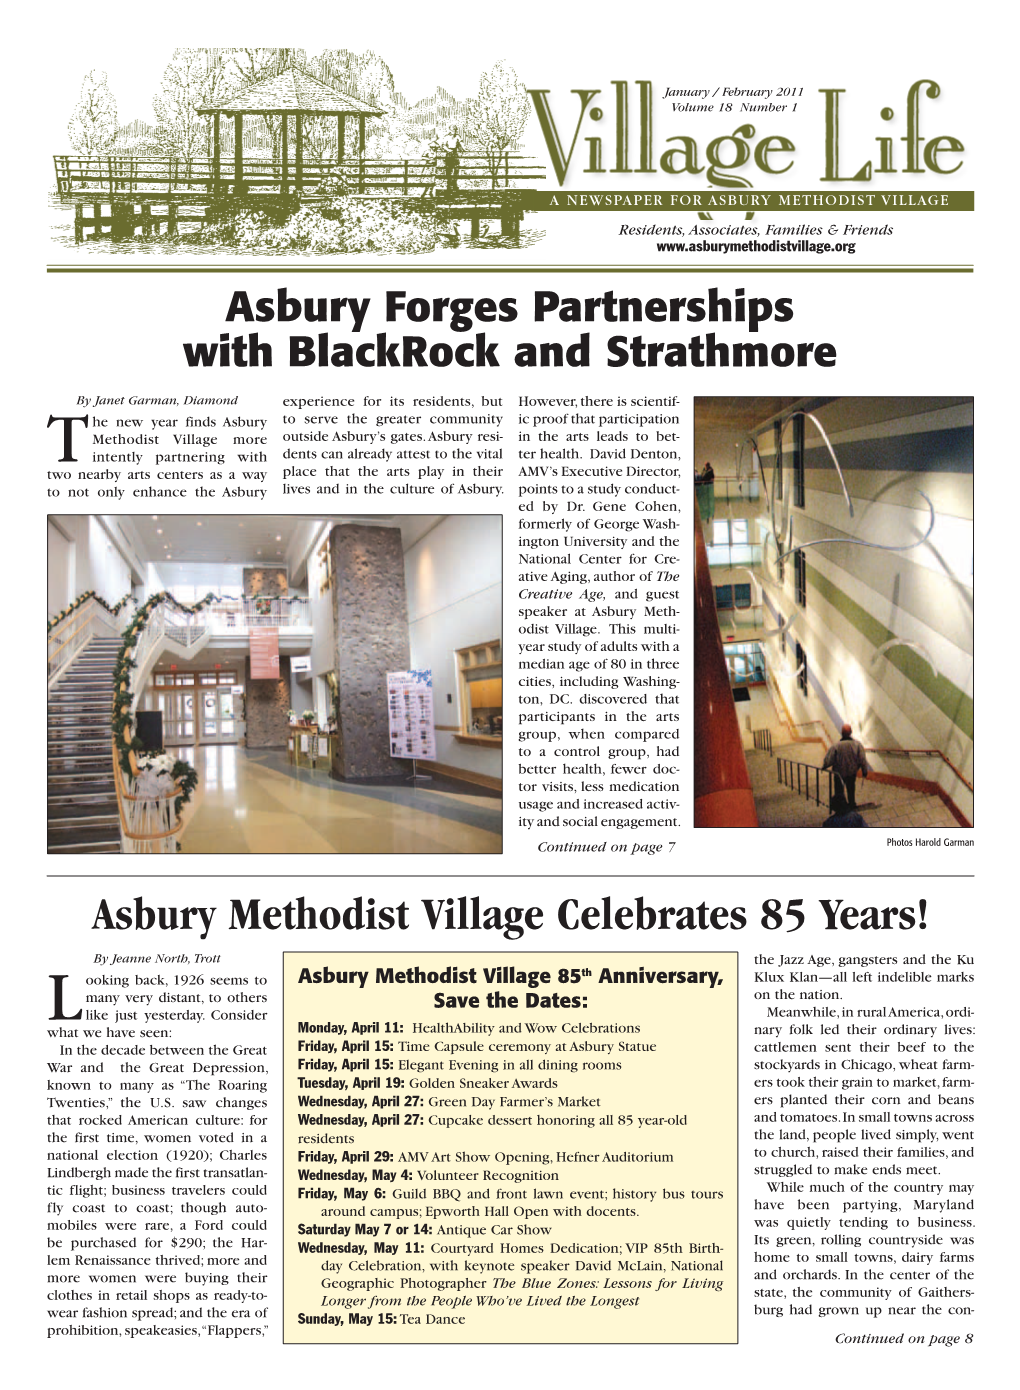 Asbury Methodist Village Celebrates 85 Years!